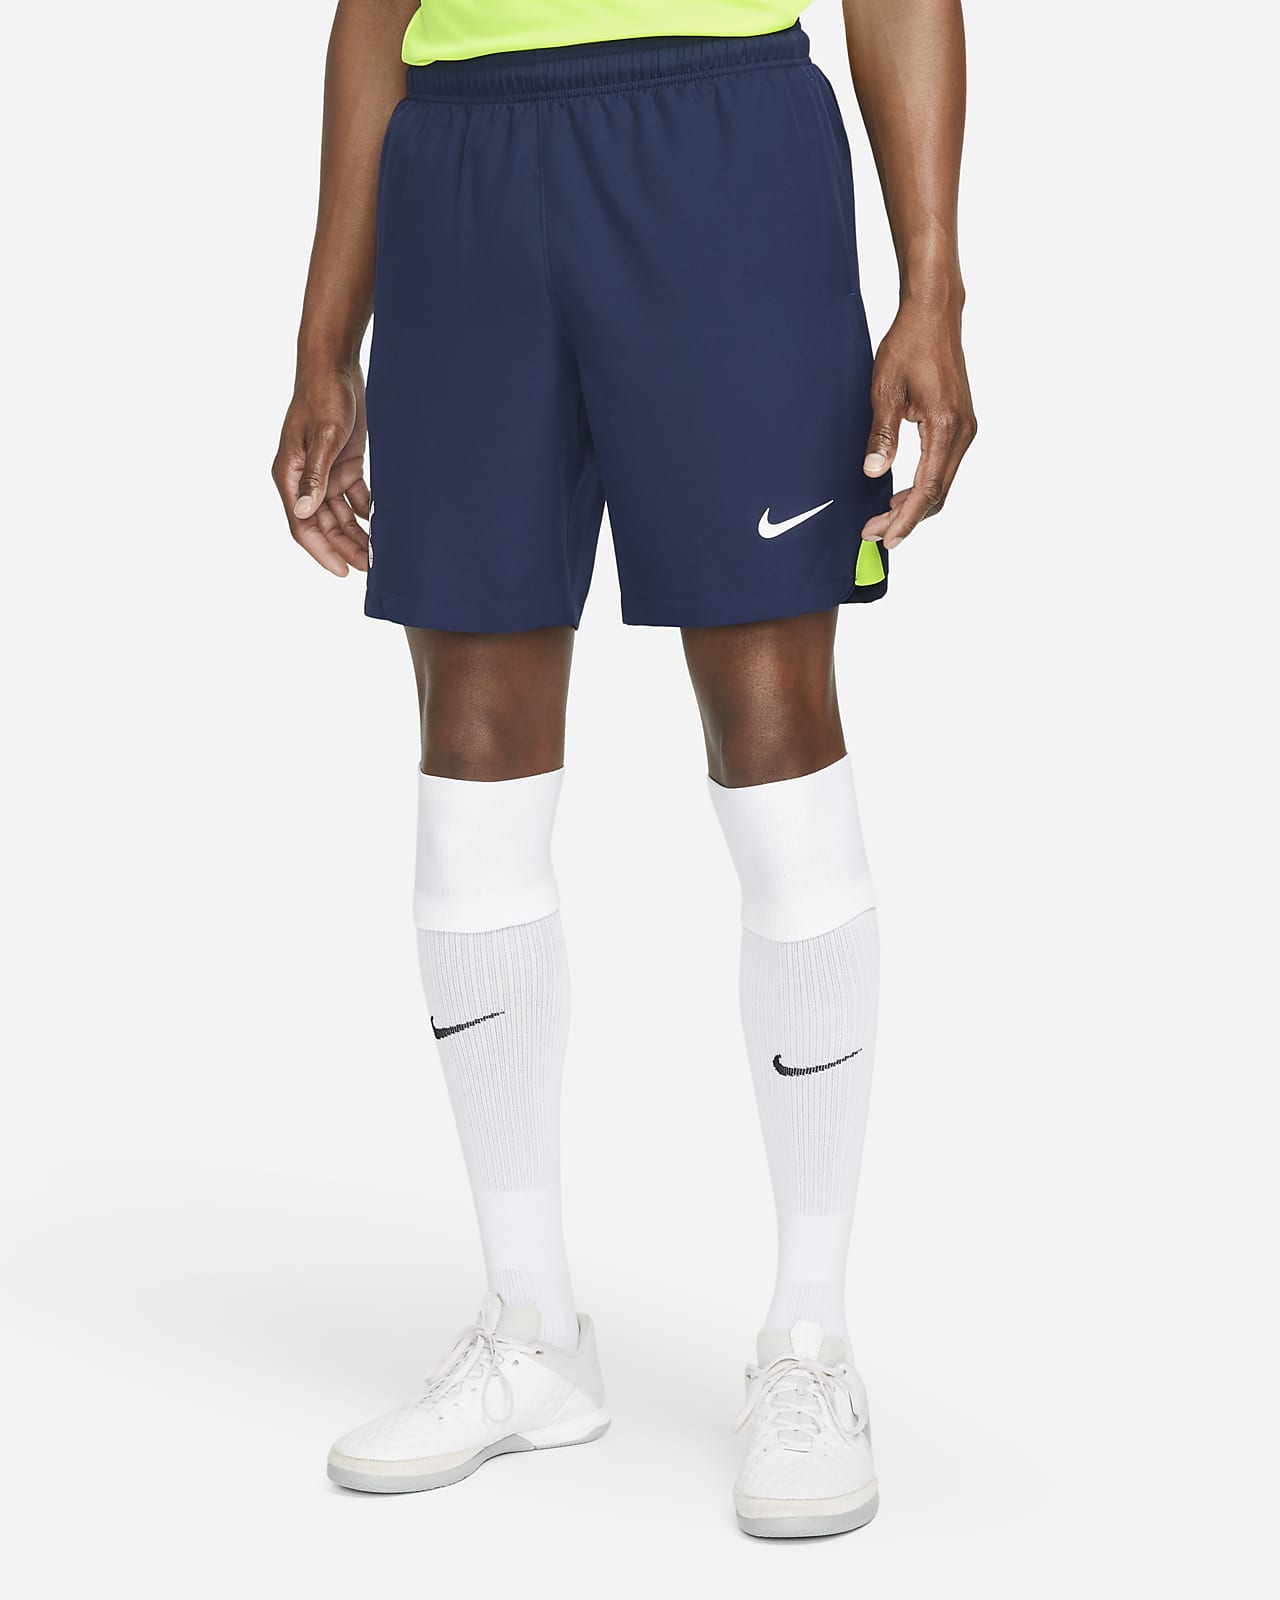 Stamboom grootmoeder Verbeteren Tottenham Hotspur 2022/23 Stadium Men's Nike Dri-FIT Soccer Shorts. Nike.com